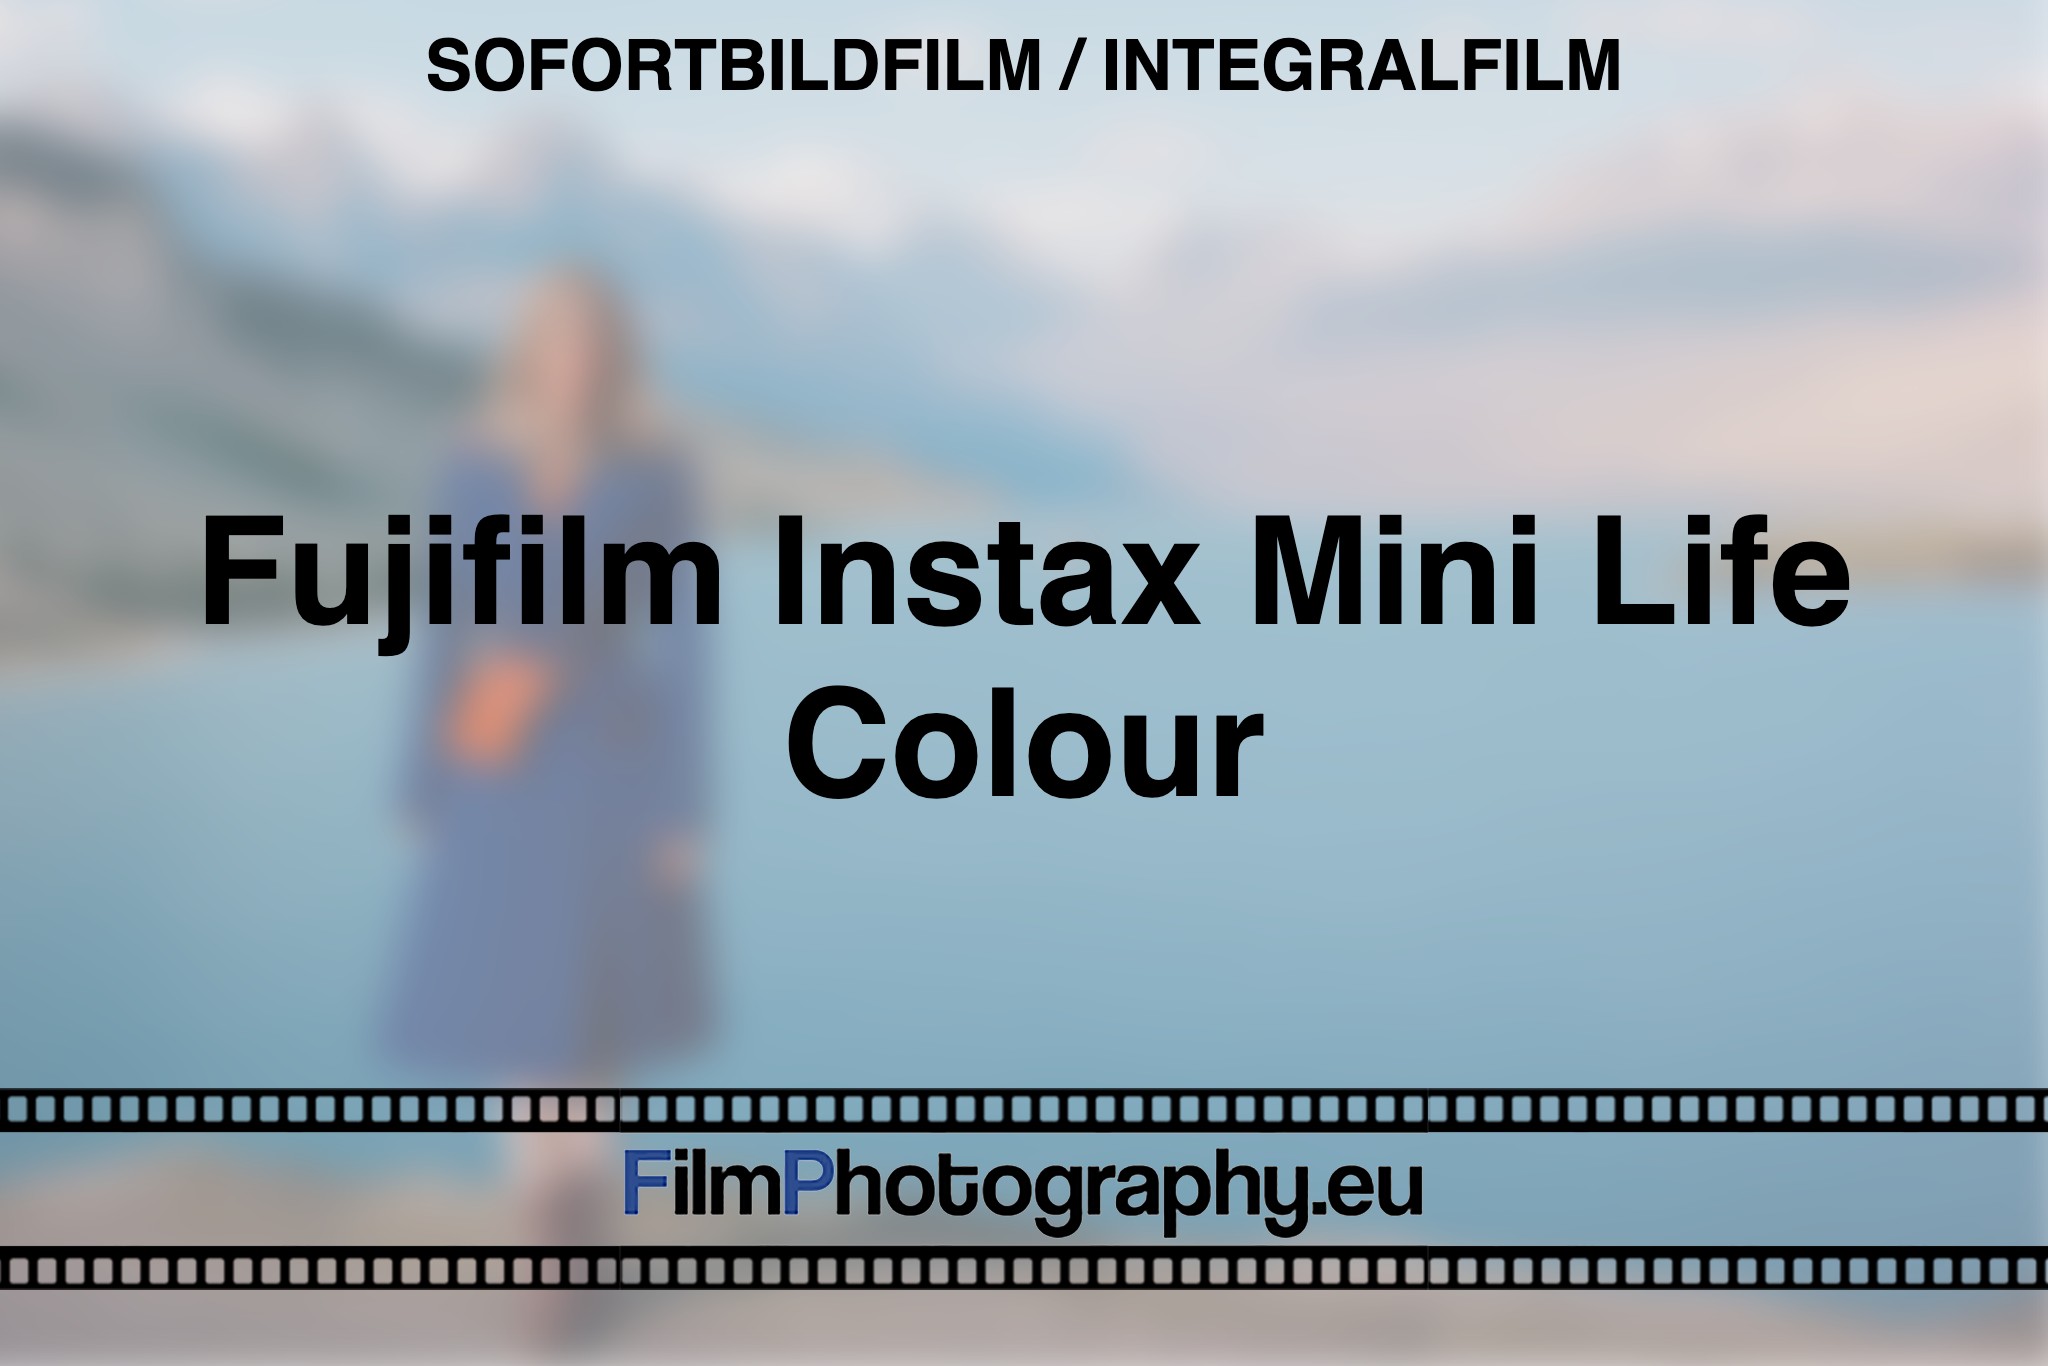 fujifilm-instax-mini-life-colour-sofortbildfilm-integralfilm-bnv